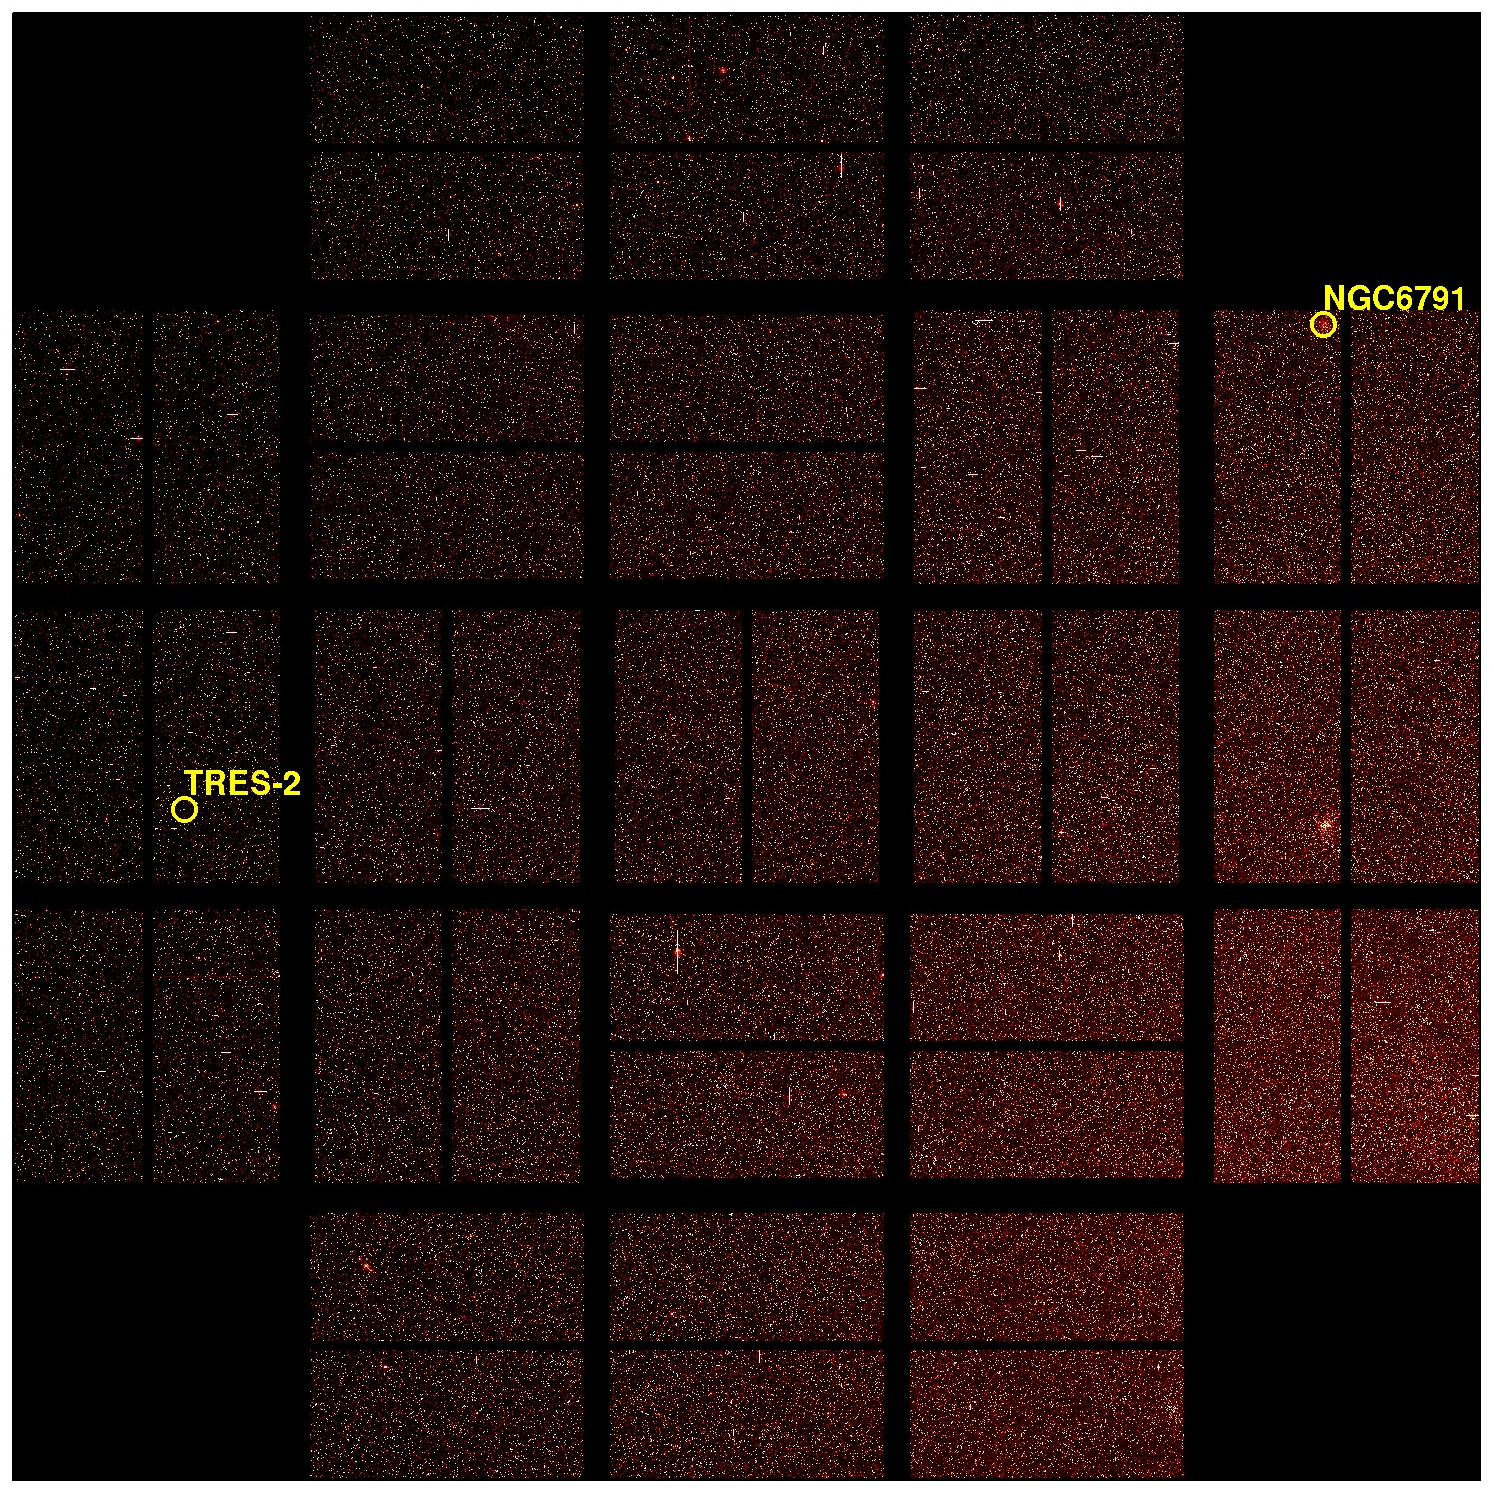 Full Focal Plane Image (First Light for Kepler Photometer) with labels